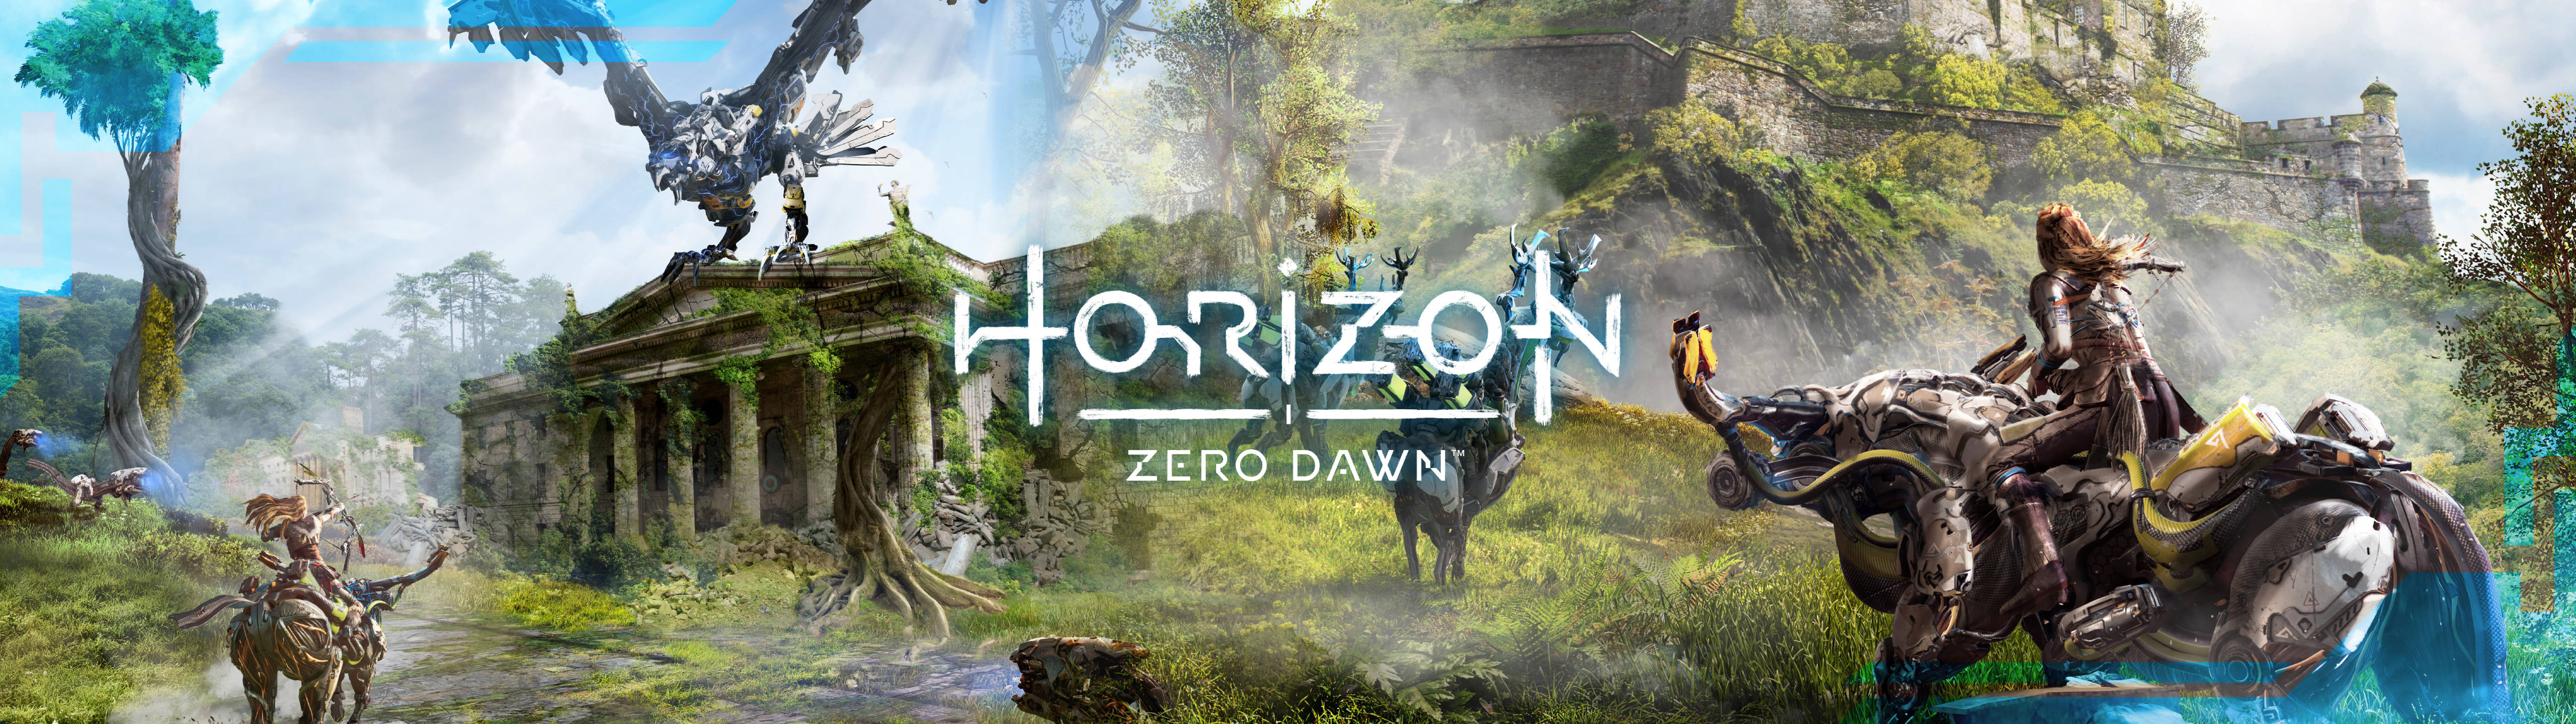 Horizon Zero Dawn Landscape 5120x1440 Gaming Wallpaper